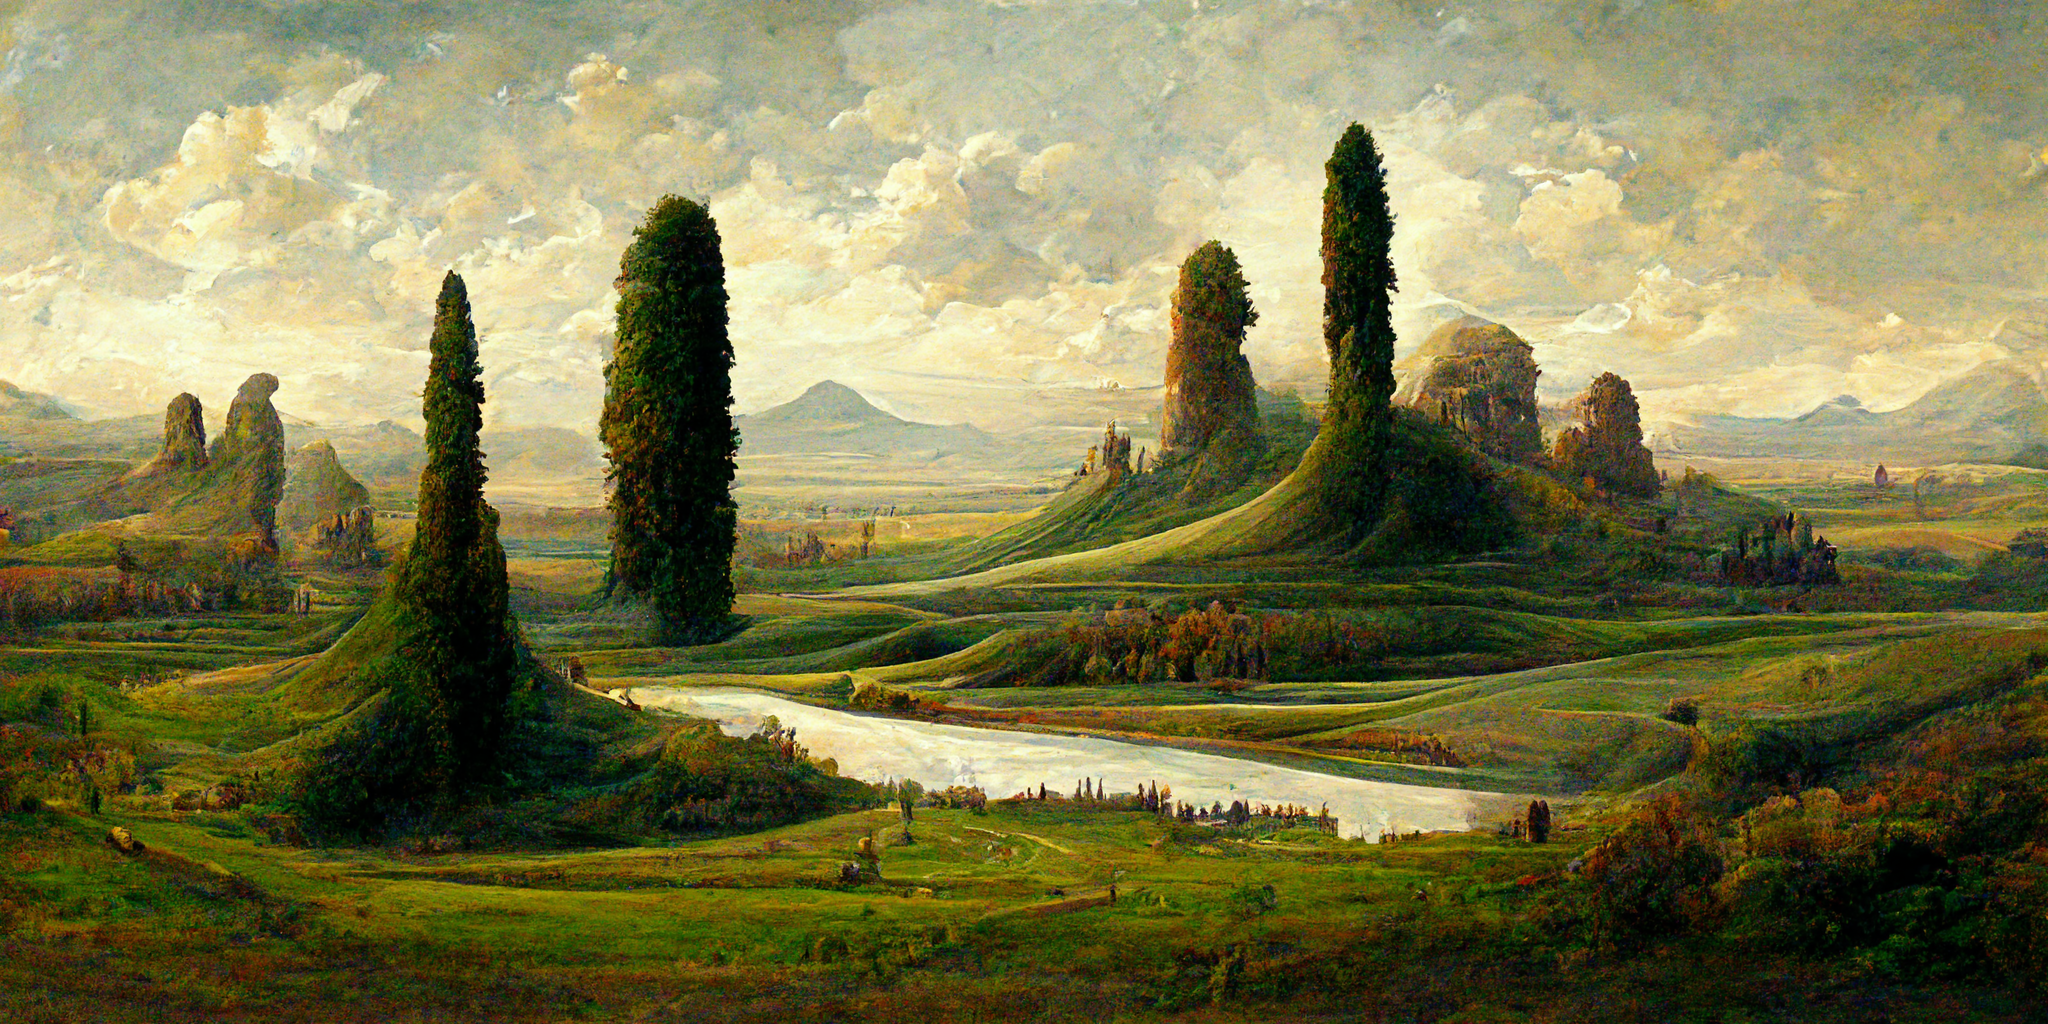 Landscape in "Da Vinci" style